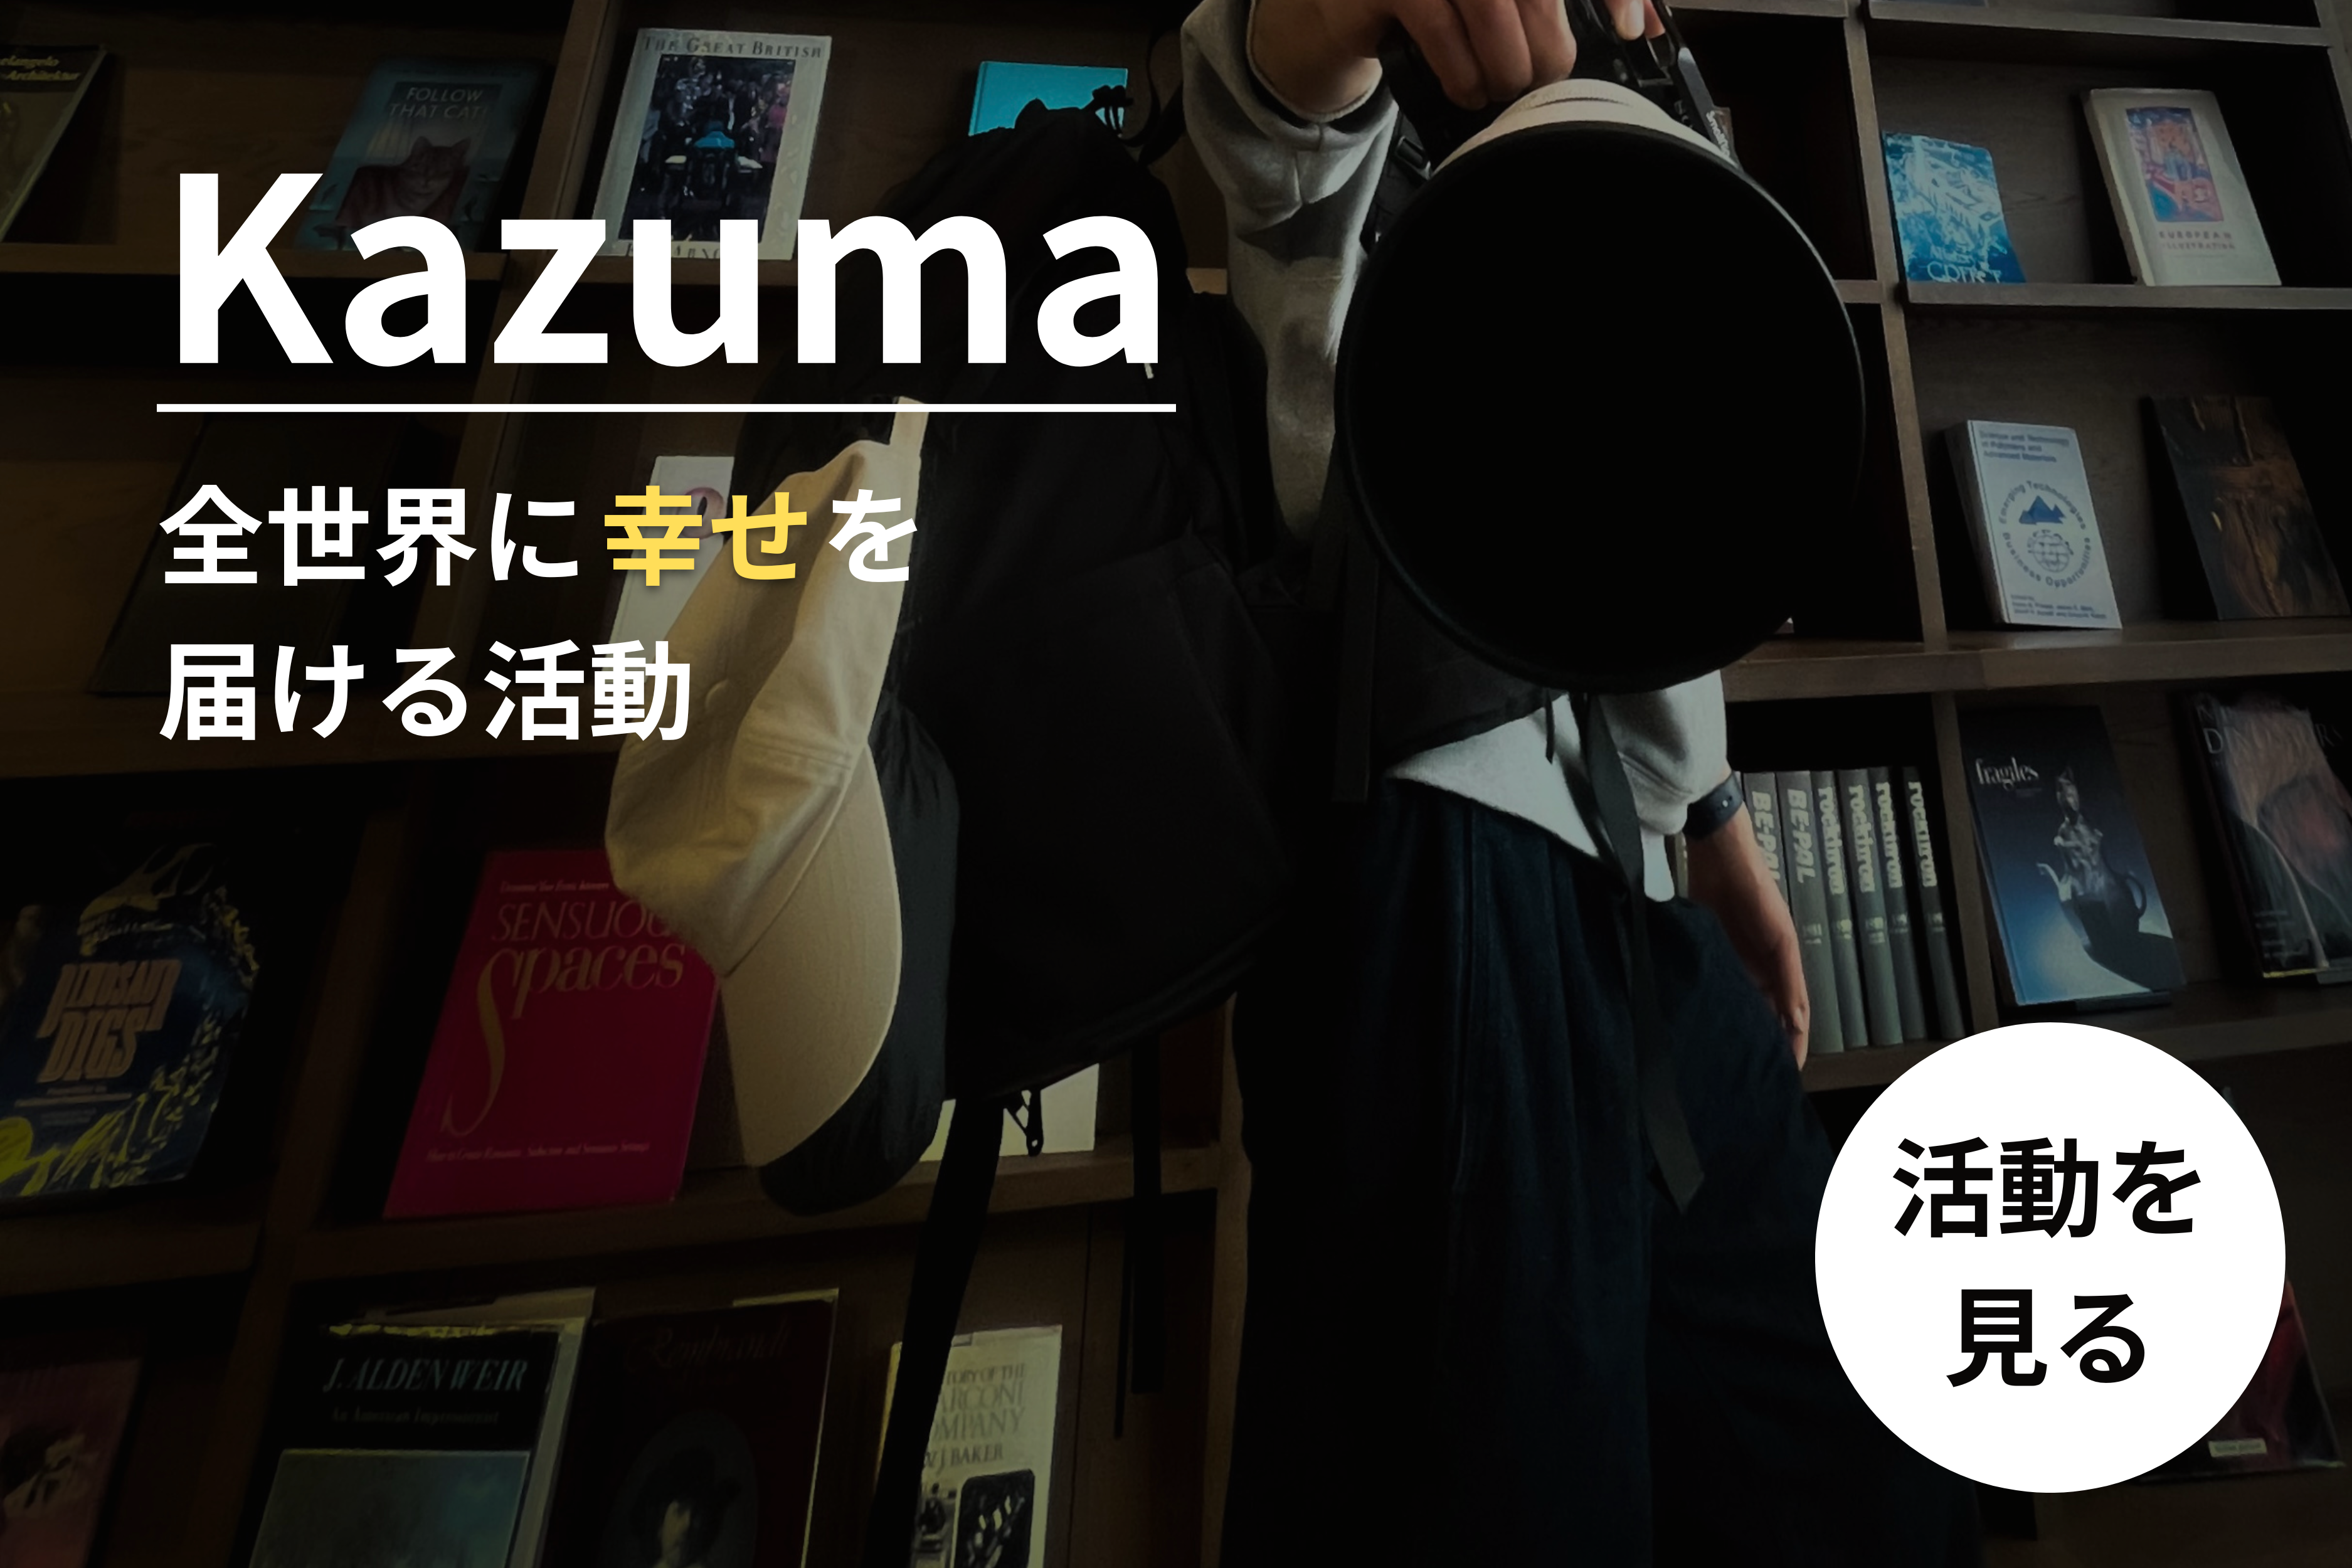 Kazuma 全世界に幸せを届ける活動　活動を見たい方はこちら